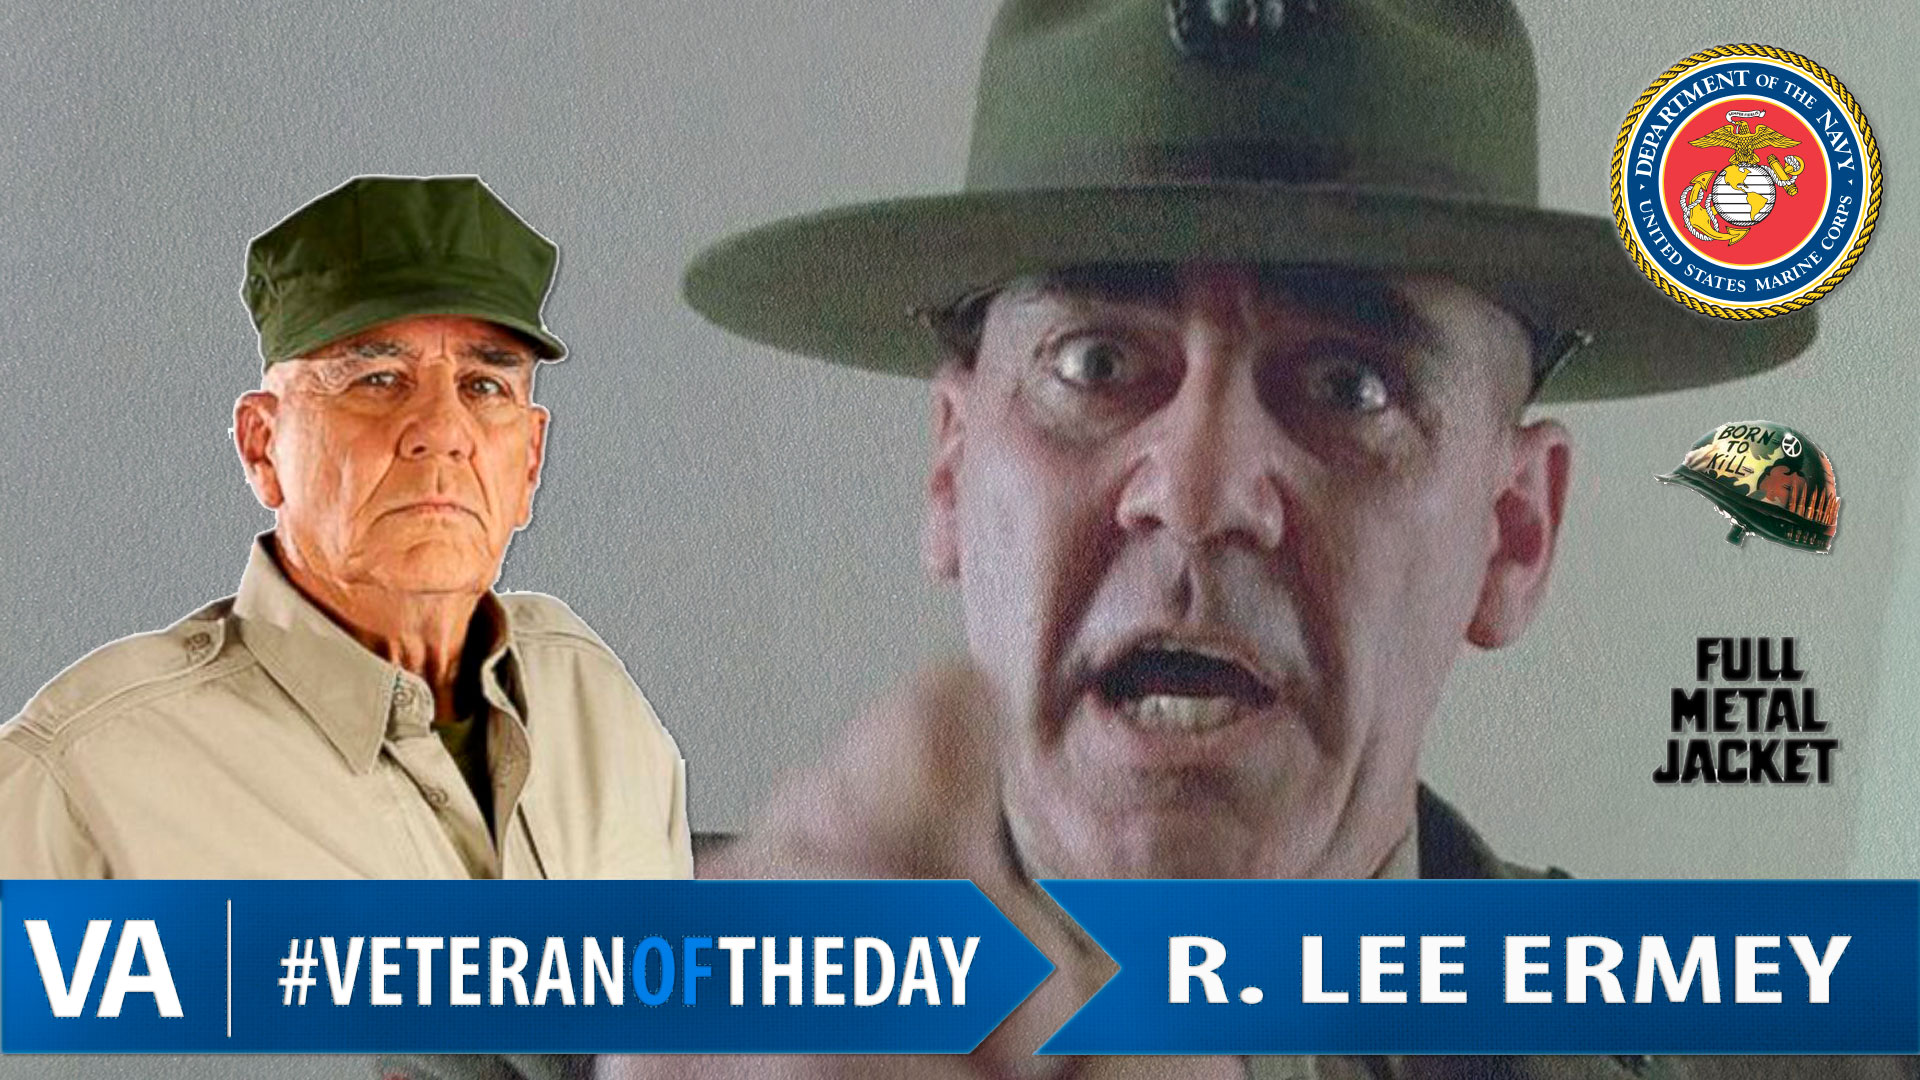 VeteranOfTheDay Marine Veteran R. Lee Ermey - VA News